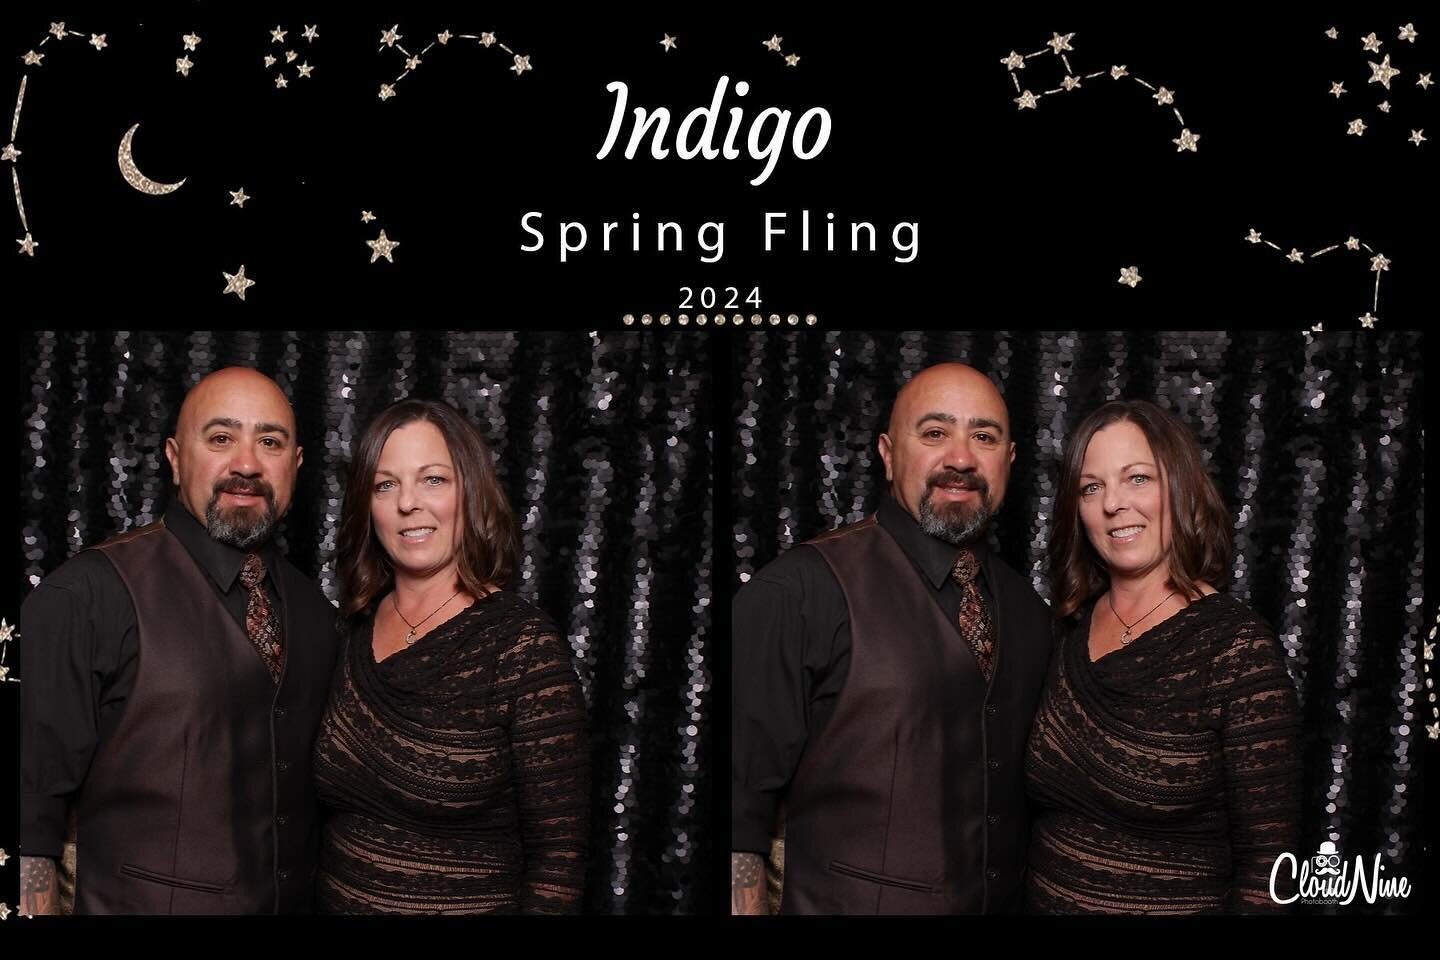 Indigo spring fling gala @cloudninephotobooth